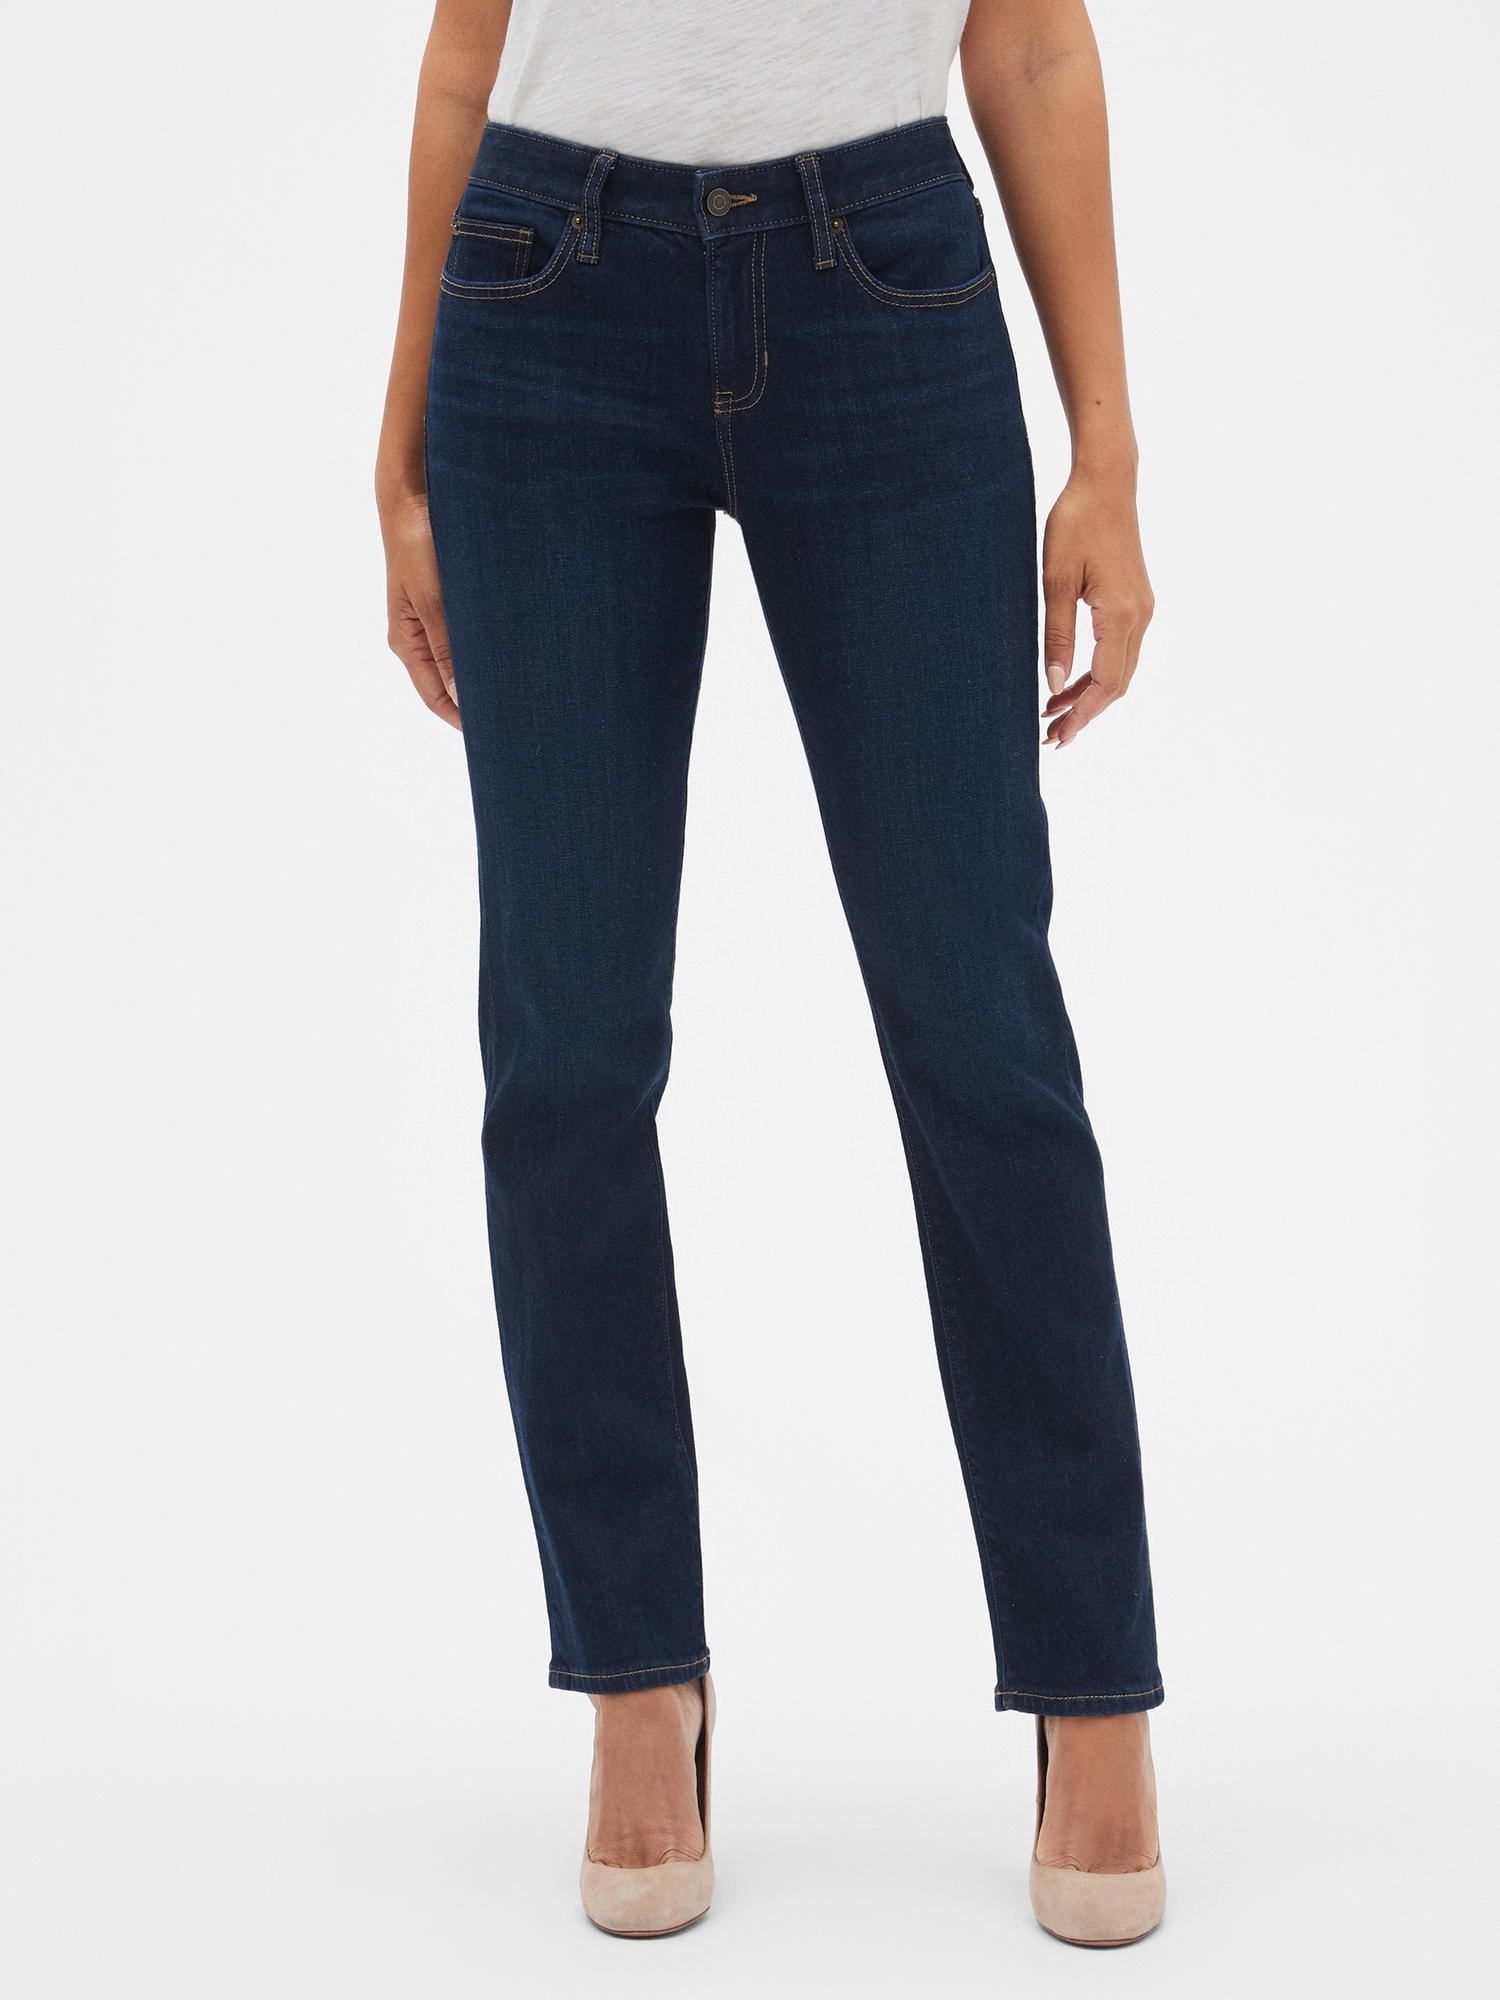 gap 1969 resolution slim straight jeans